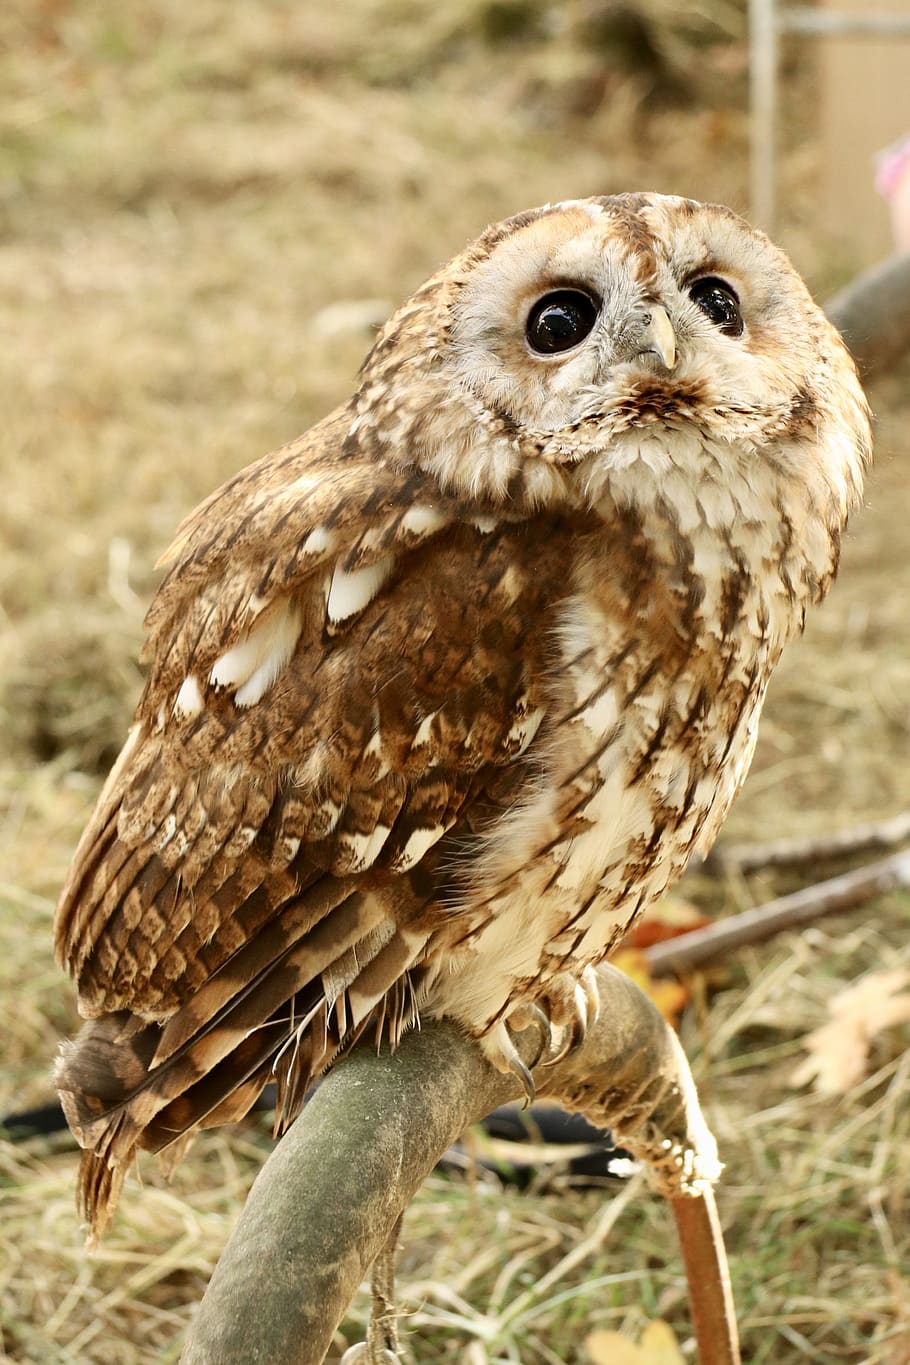 tawny owl, owl, nocturnal bird, animal themes, animal, bird, animal wildlife, one animal, animals in the wild, bird of prey